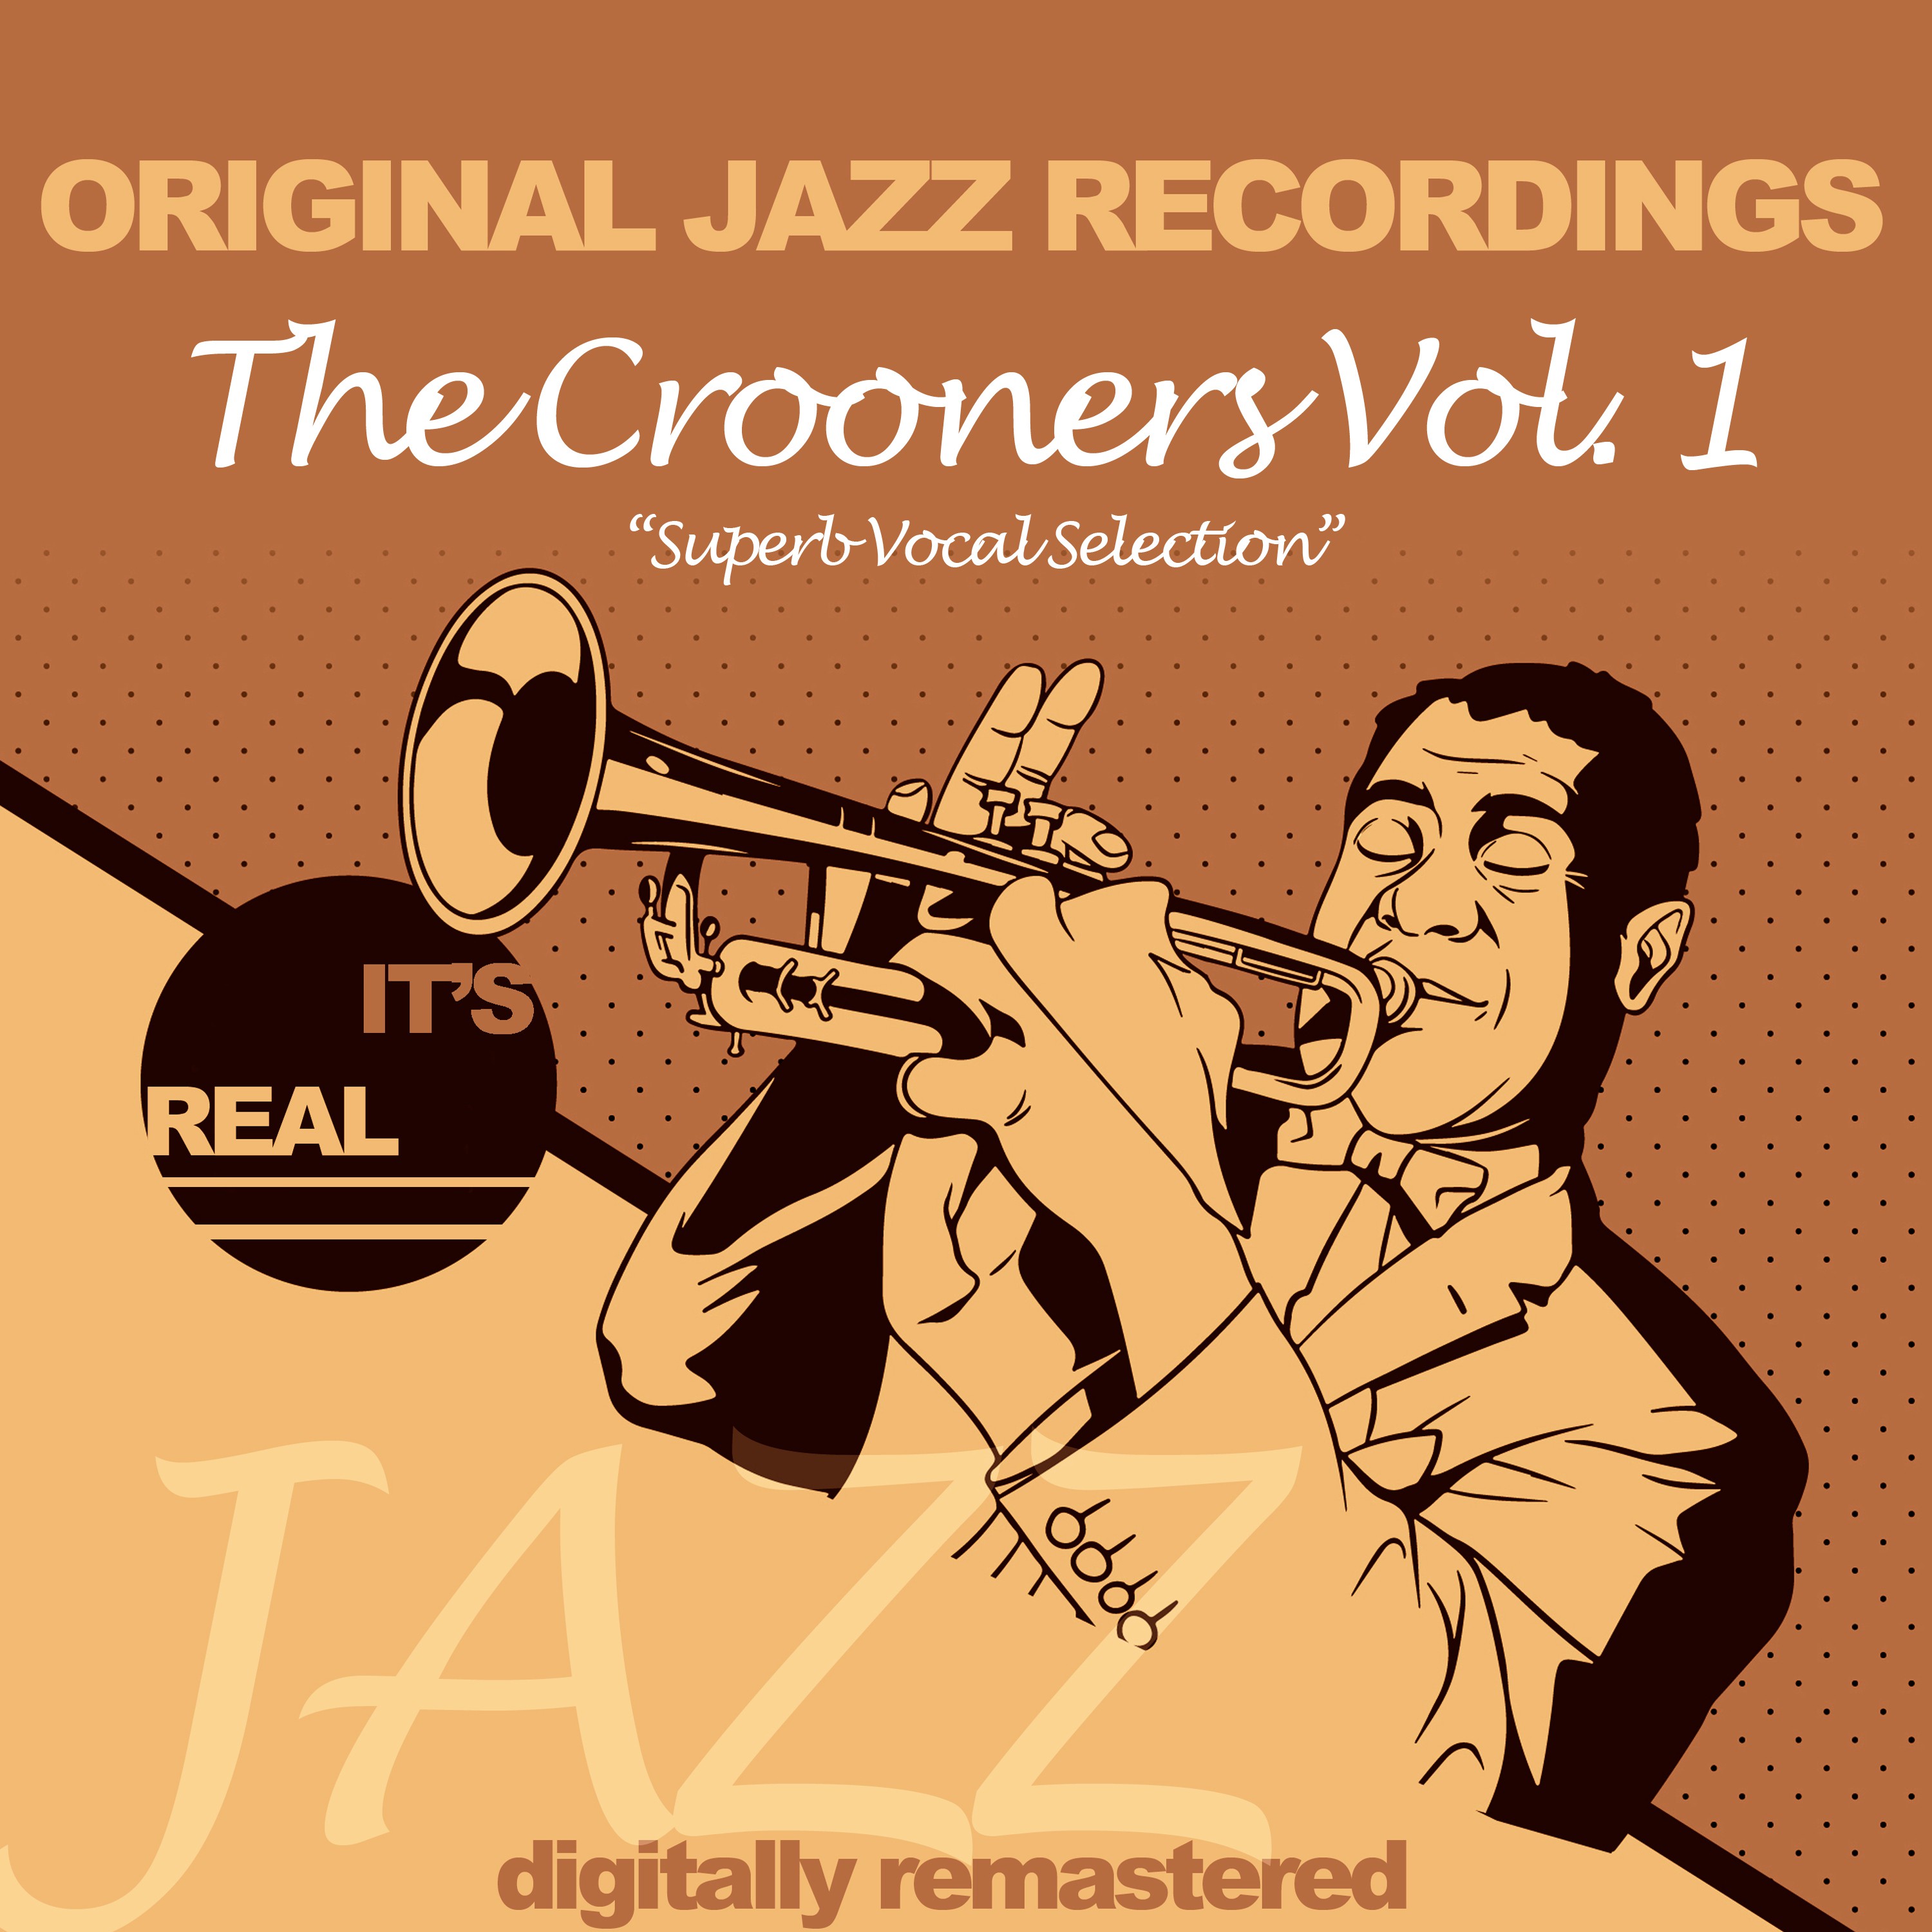 Original Jazz Recordings, the Crooners Vol. 1